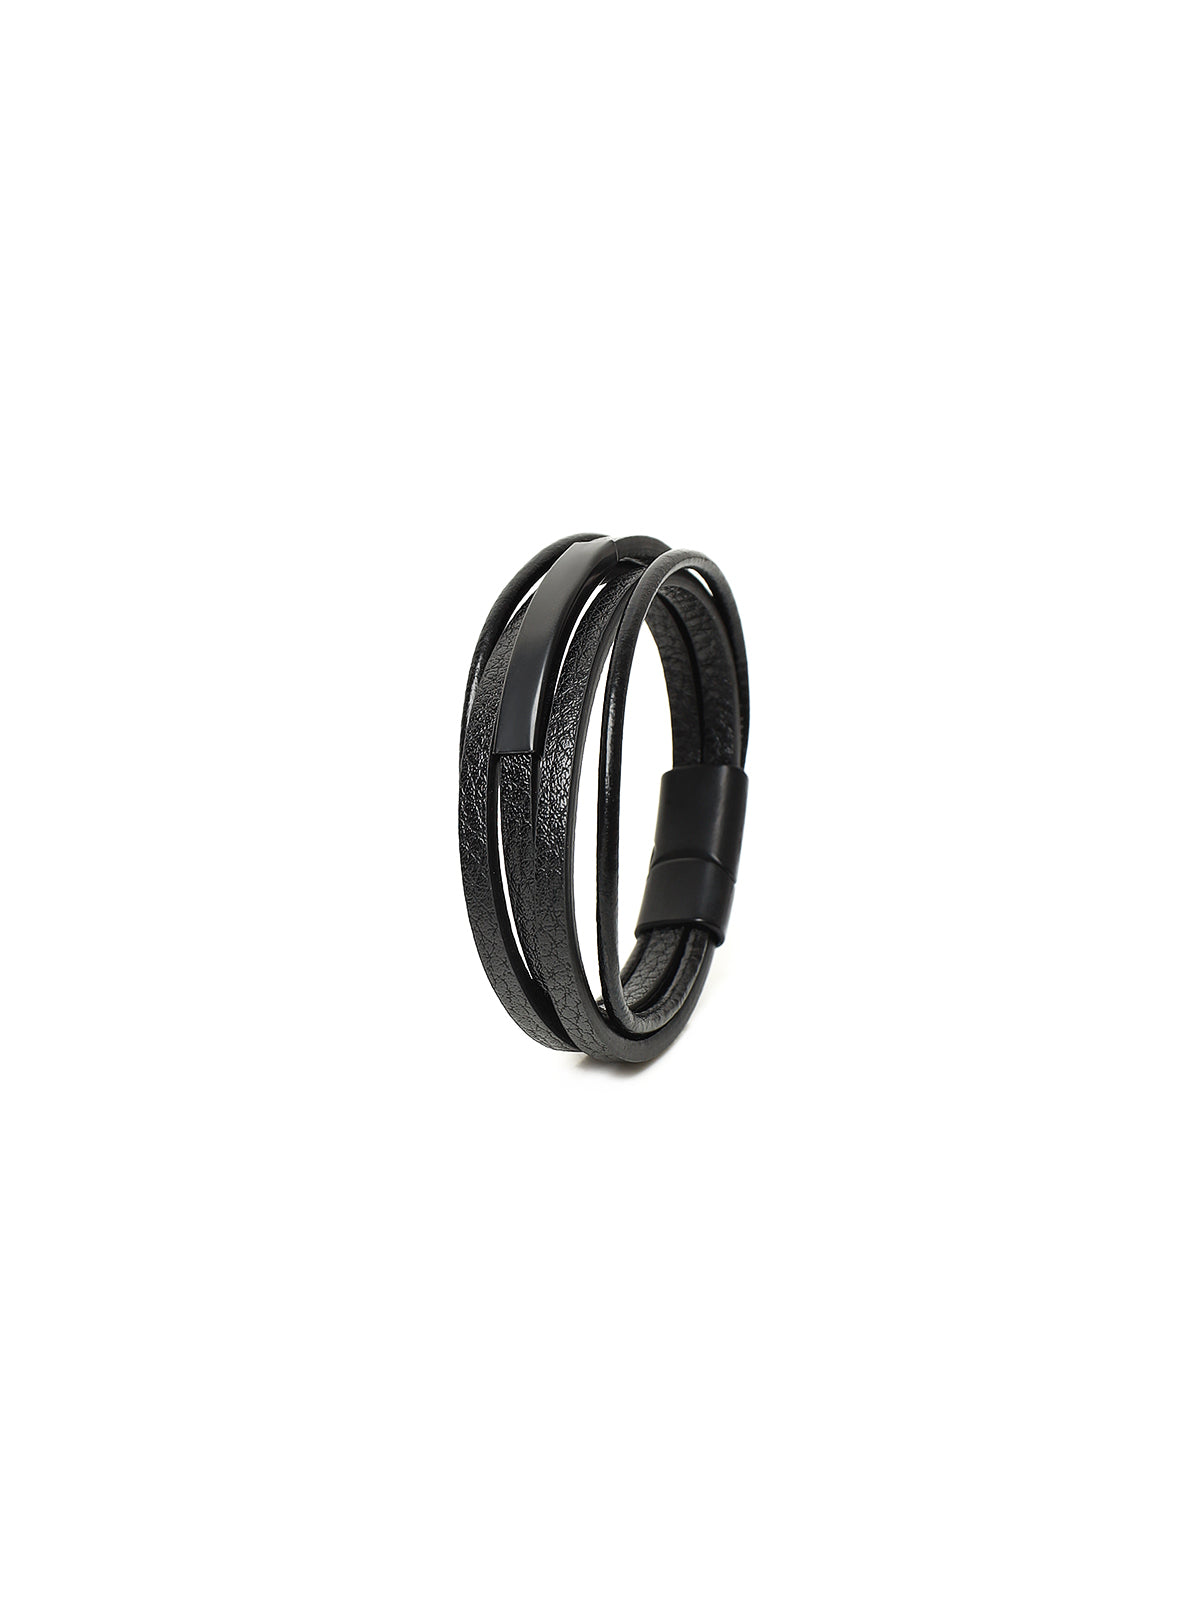 Black Leather Bracelet - FABR24-015